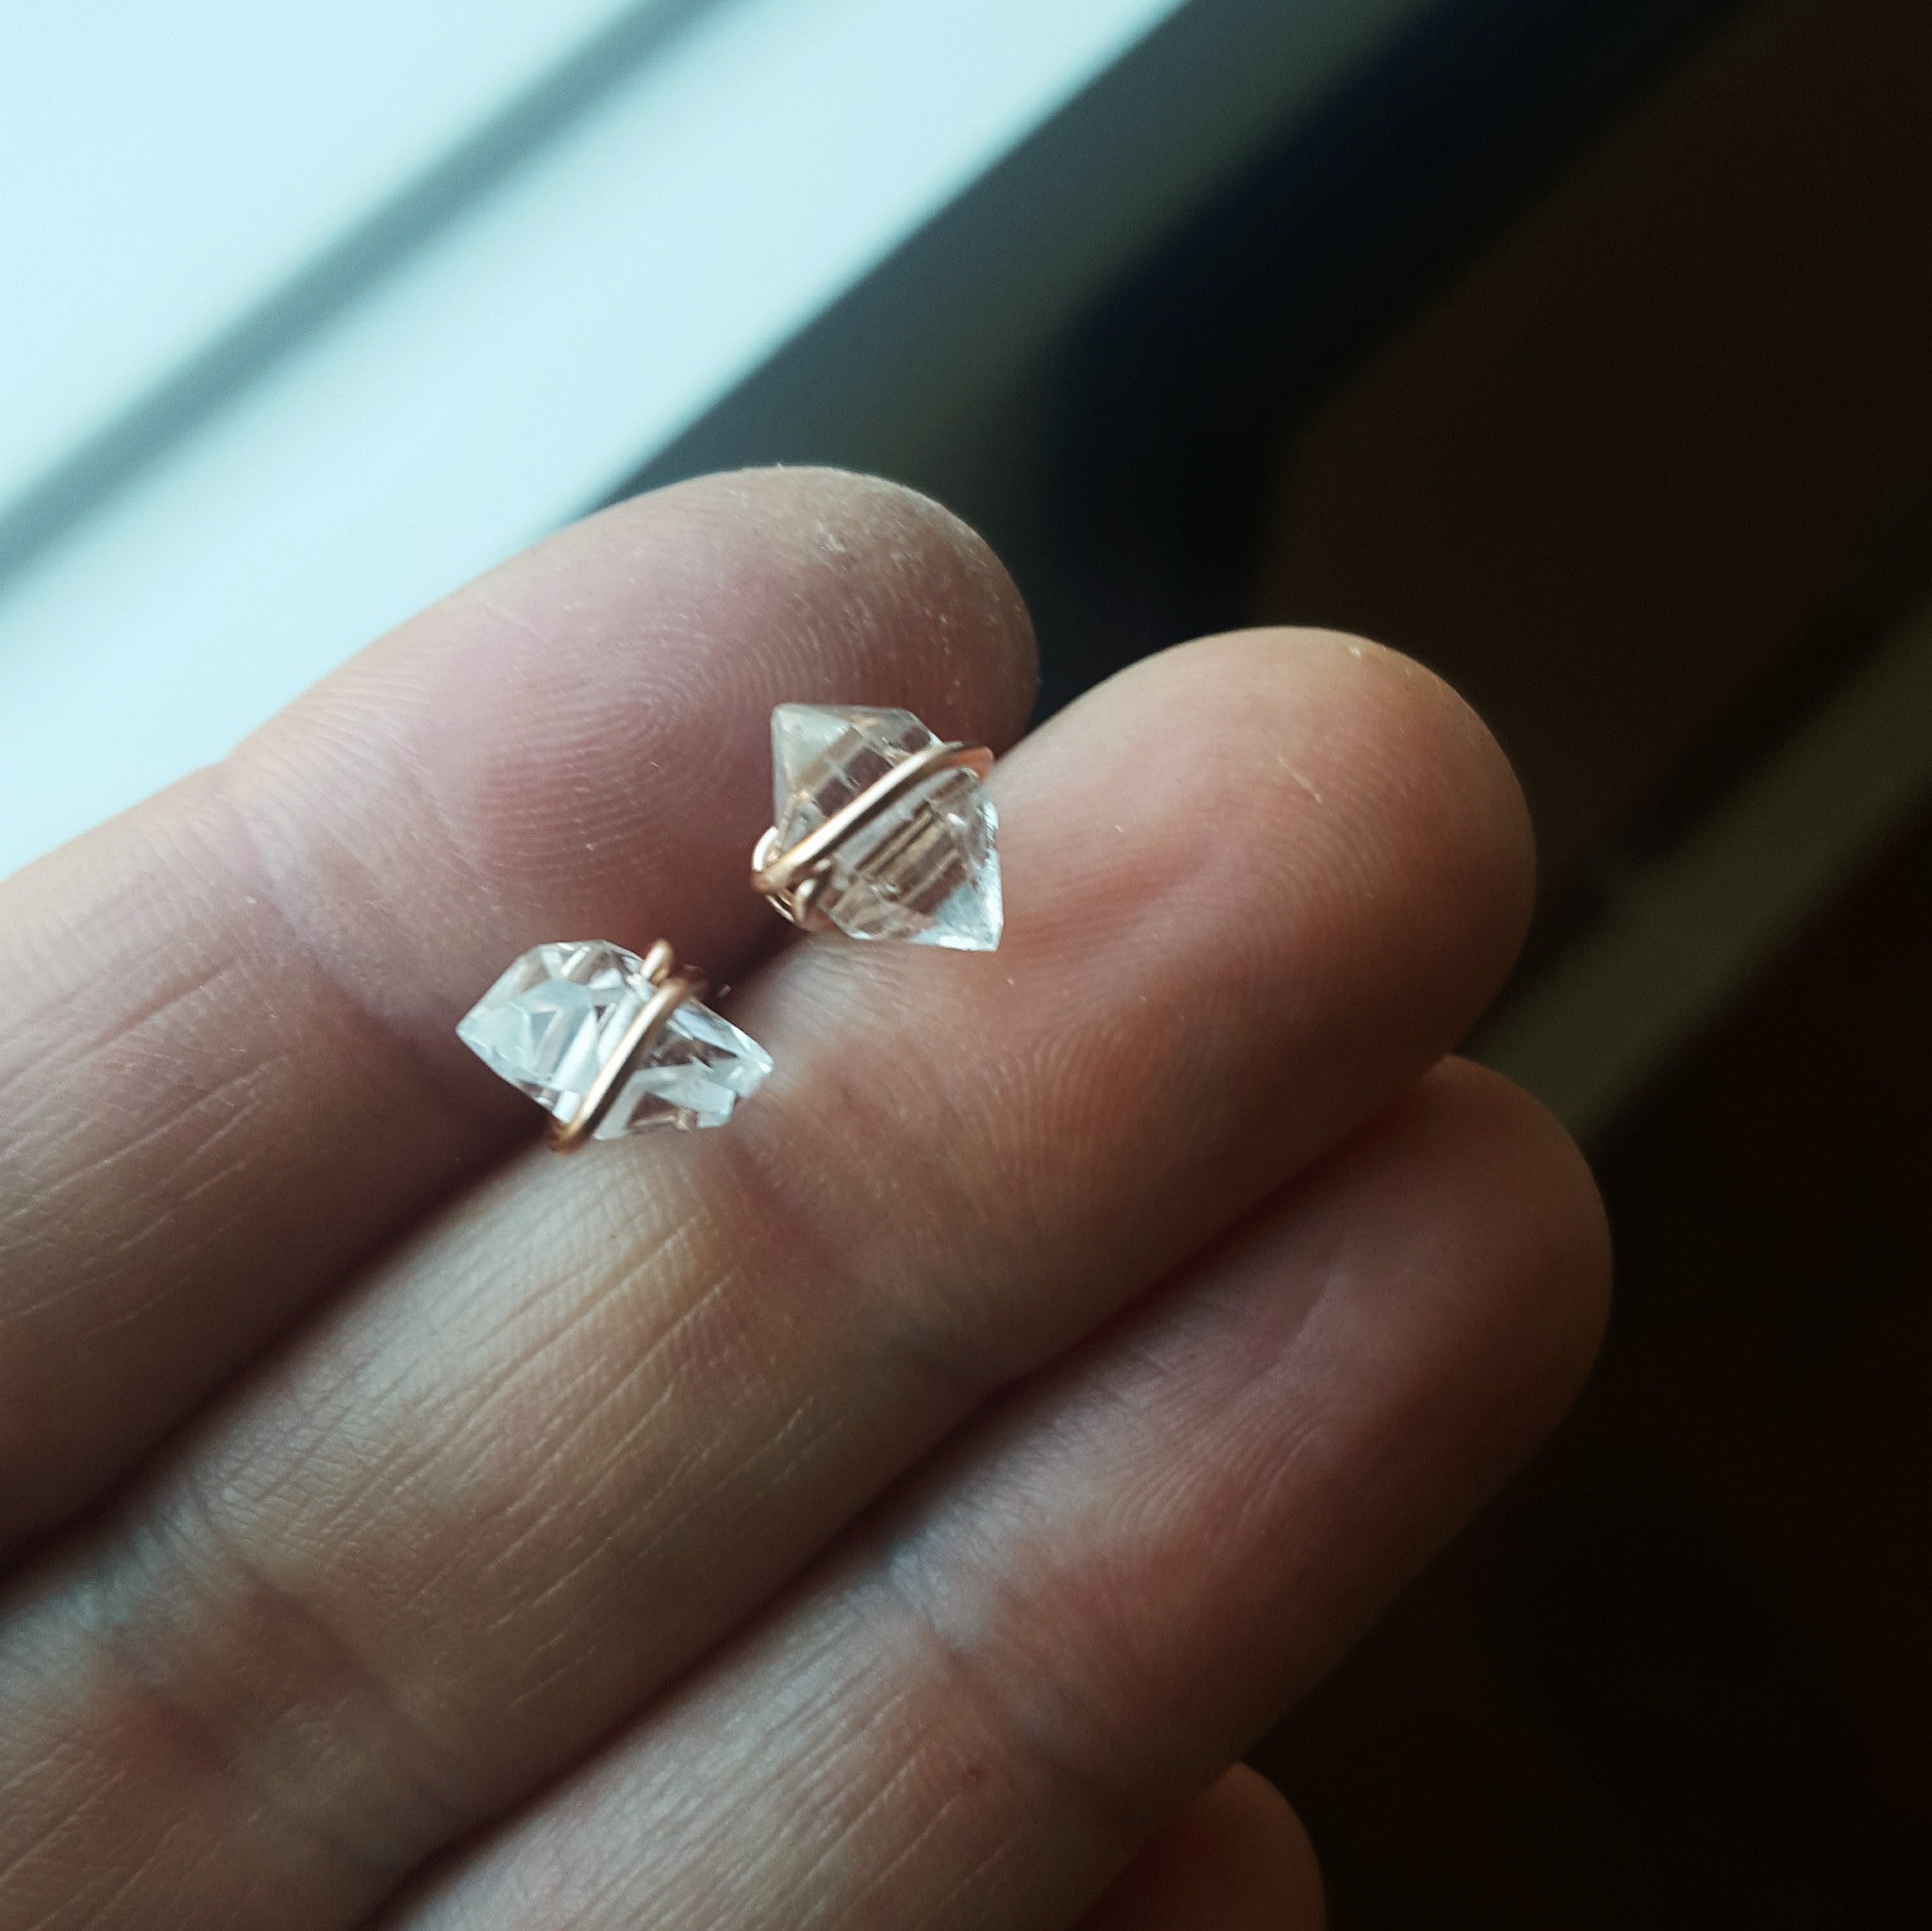 a pair of gold herkimer diamond earrings held between two fingers